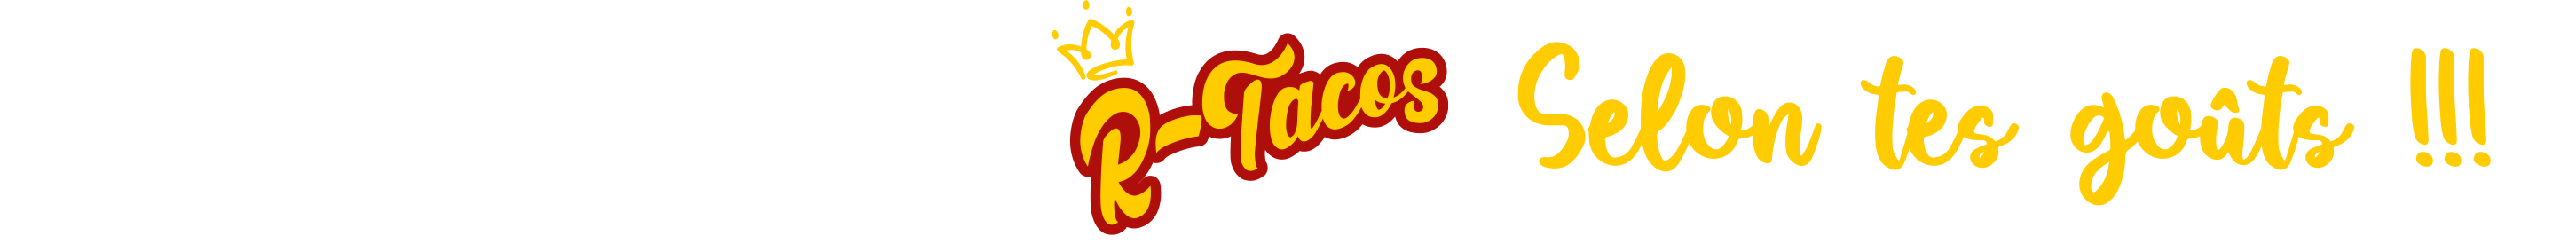 Compose ton r-tacos selon tes goûts !